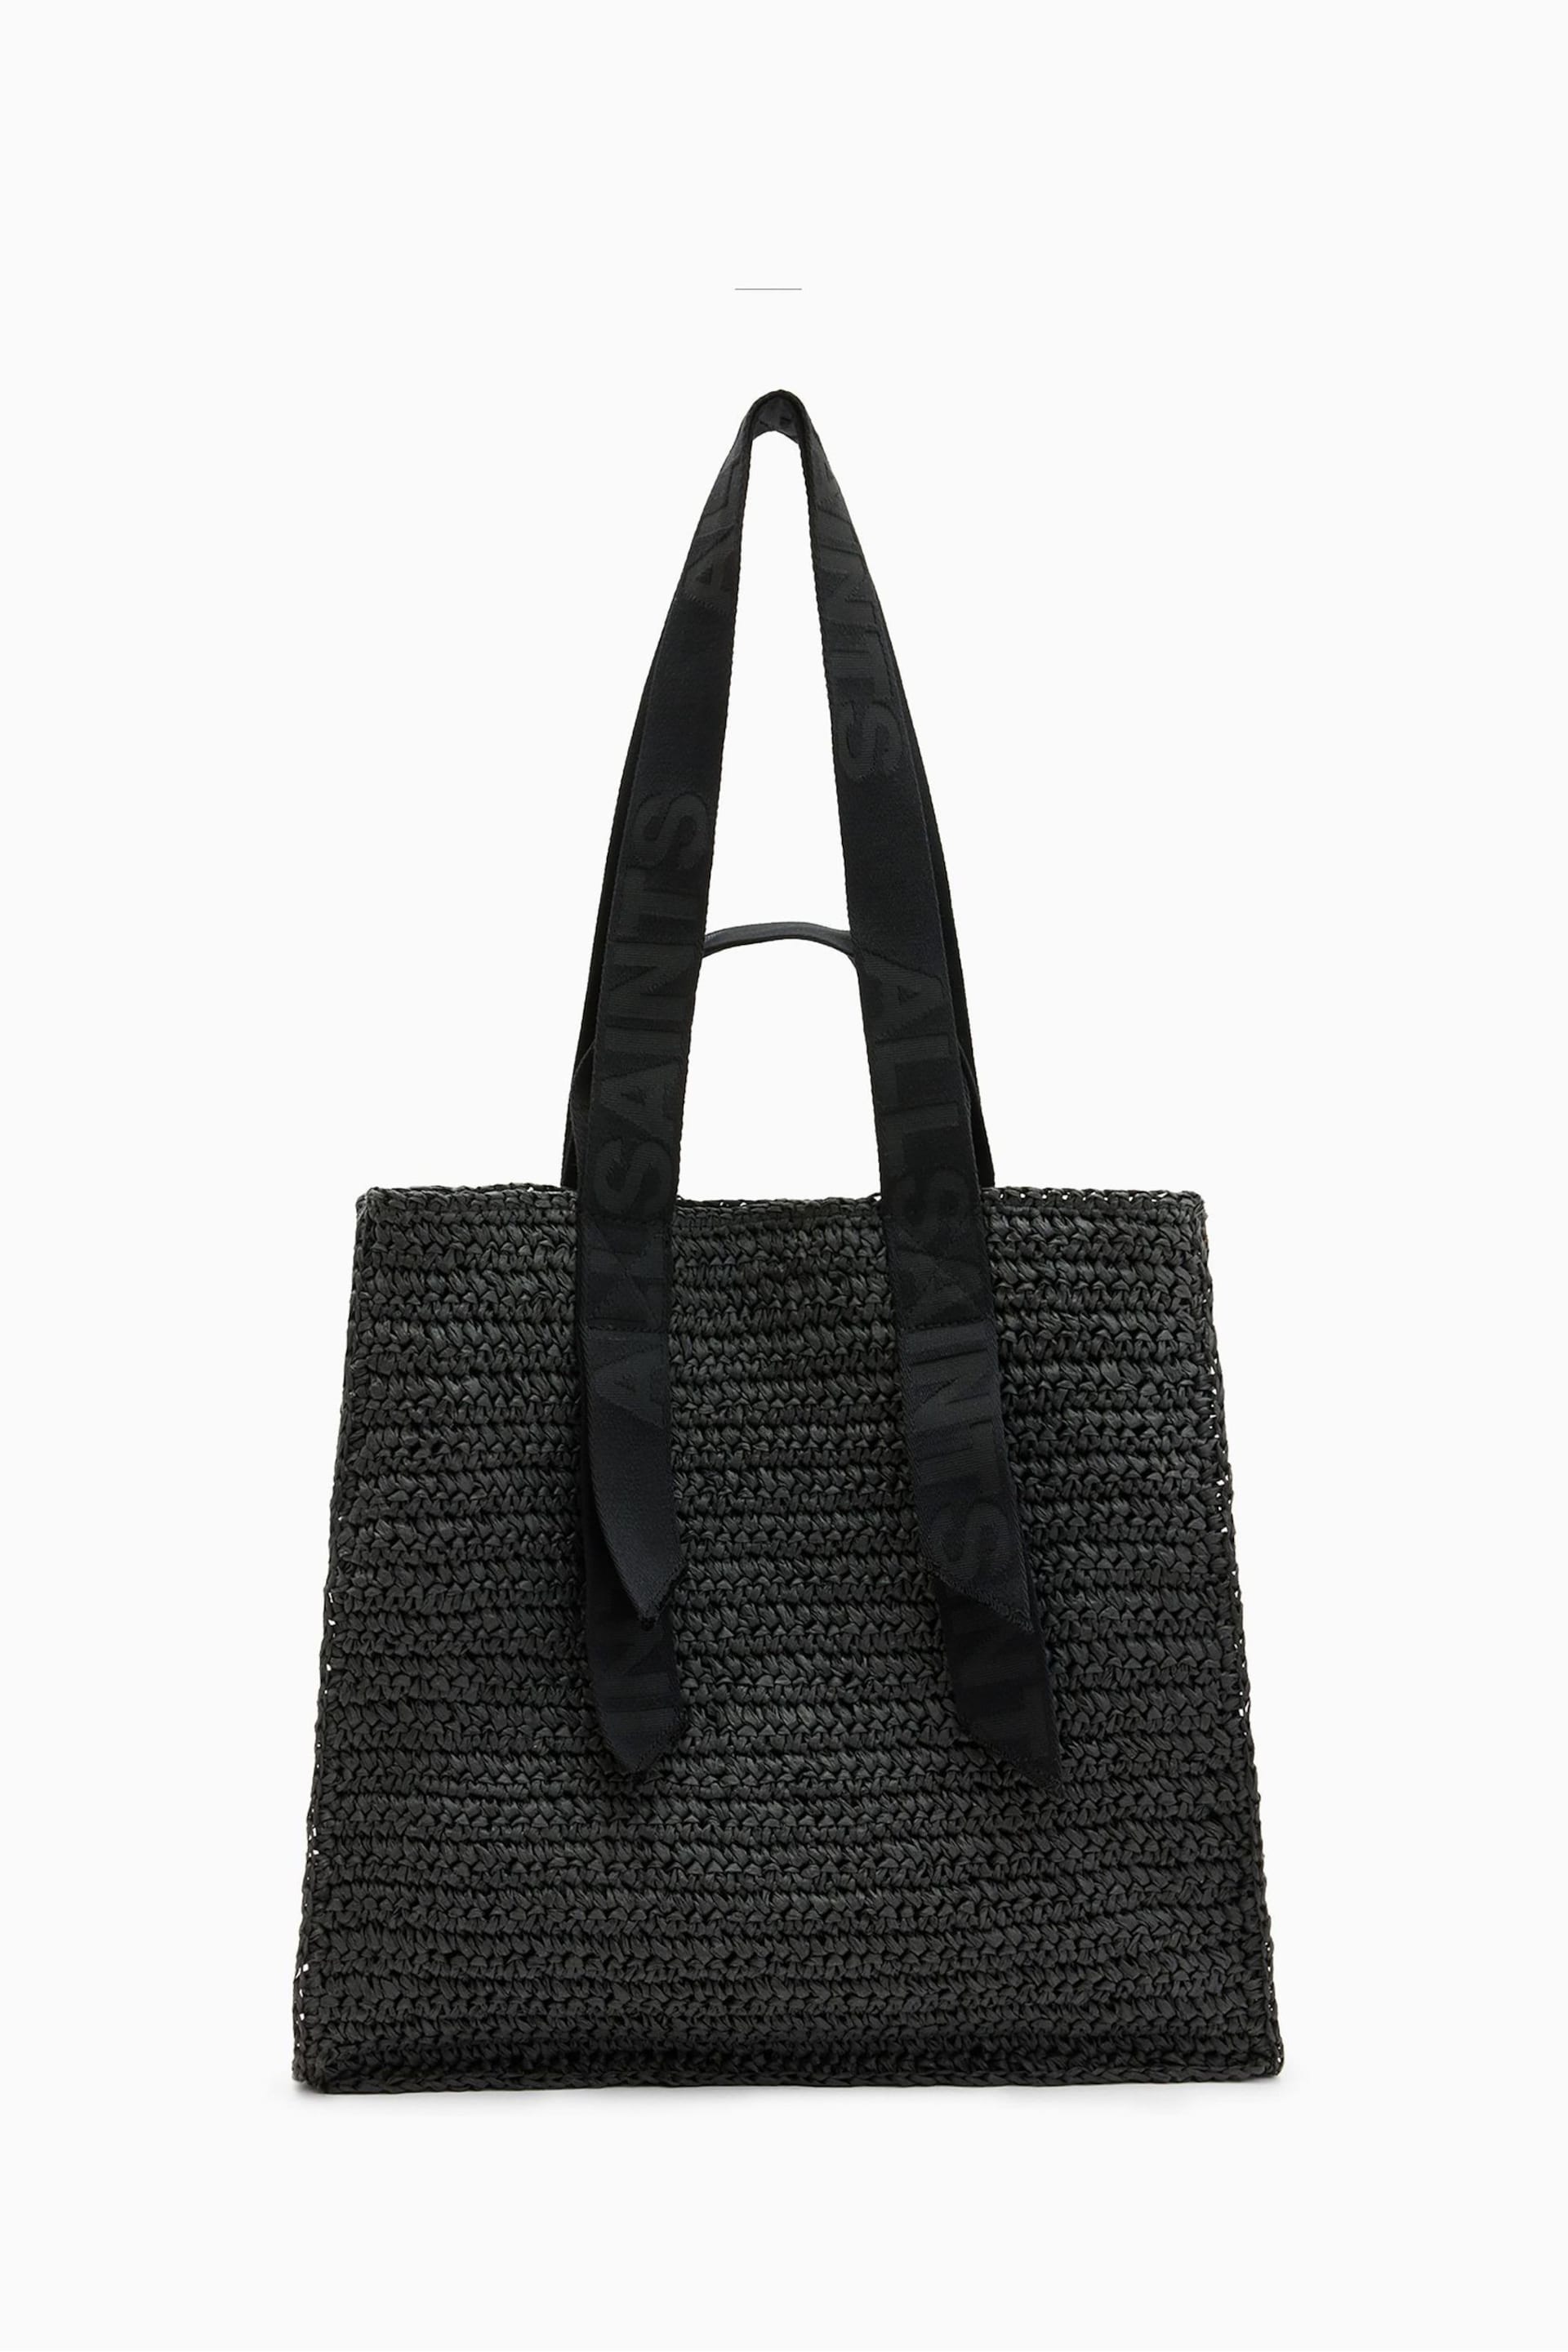 AllSaints Black Lullah N/S Tote Bag - Image 3 of 7